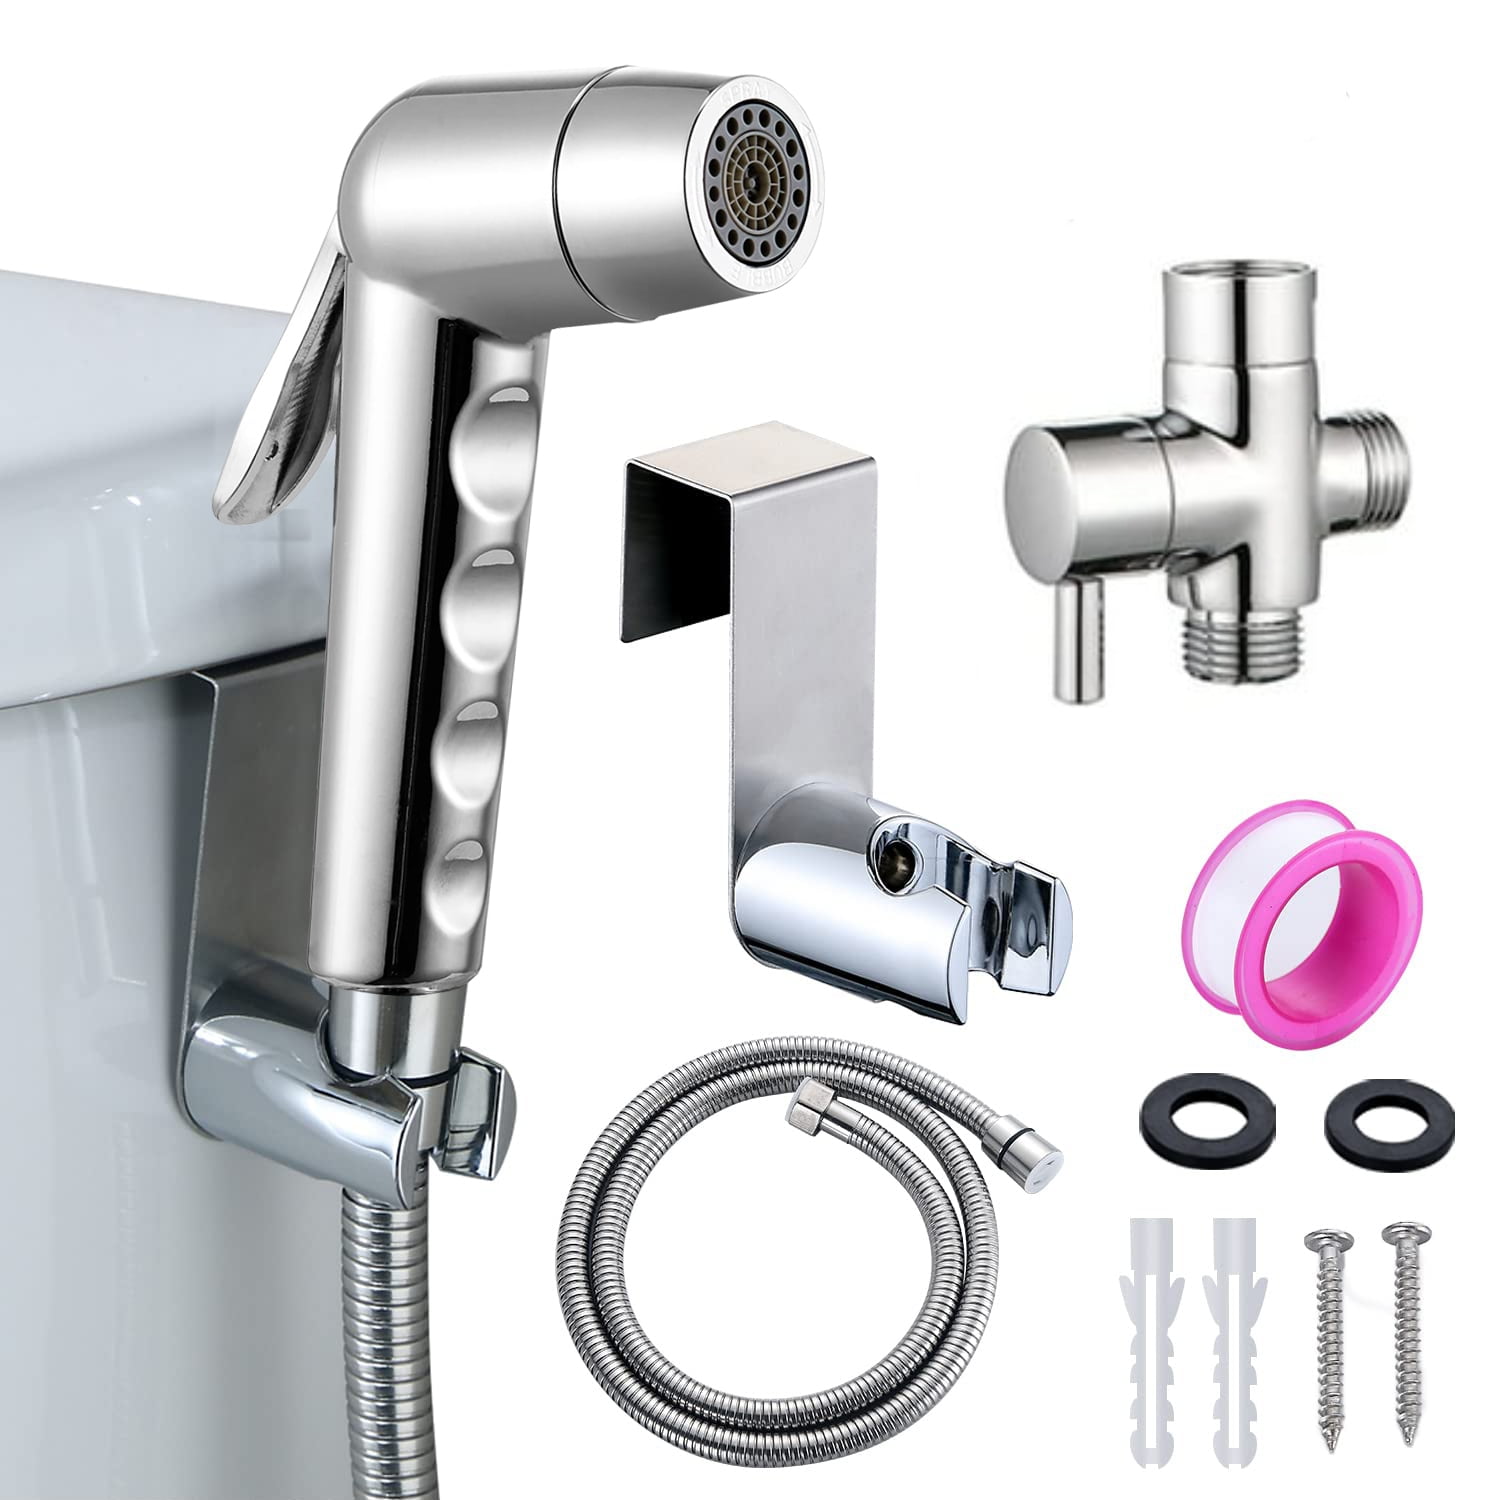 SEREE Handheld Bidet Sprayer for Toilet with Hose Adjustable Water